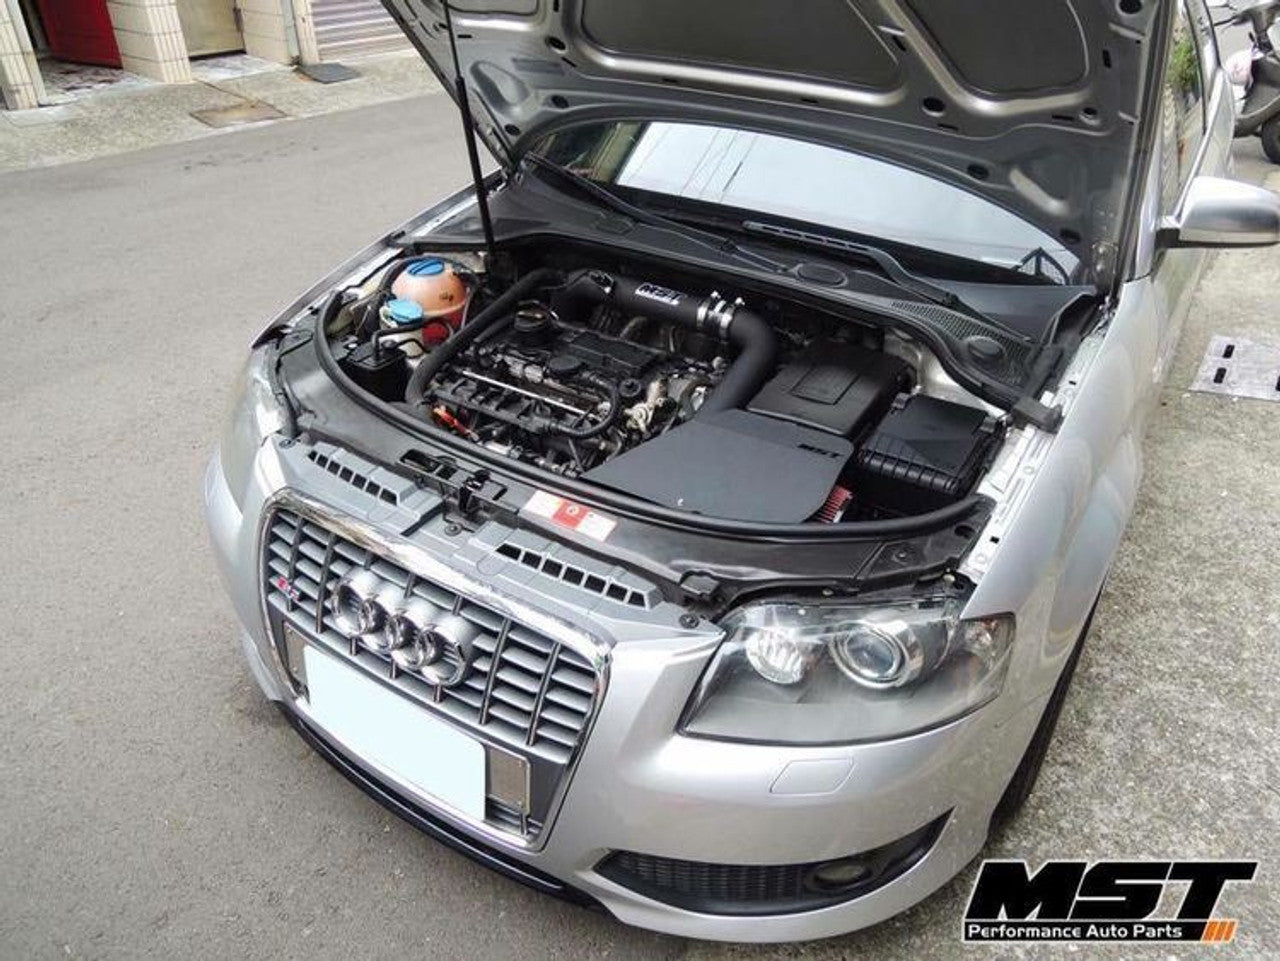 Race haus MST-VW-MK501 - Intake Kit With Full Intake pipework for VW Golf MK5 GTI MK6 R 2.0 TFSI Ea113